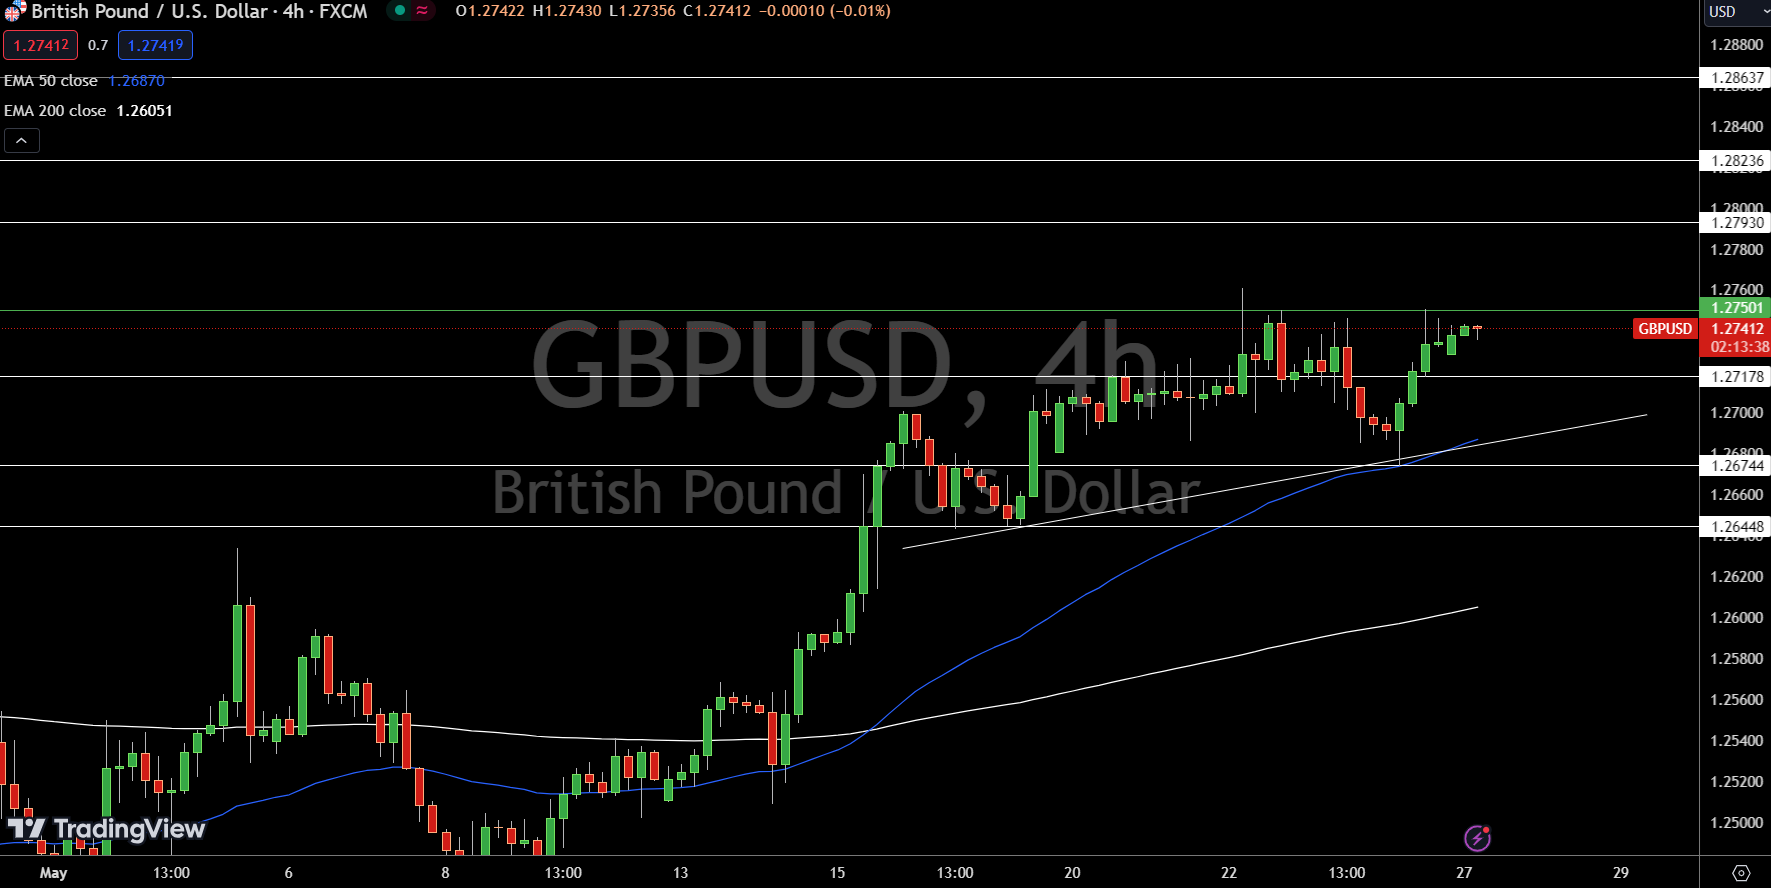 GBP/USD Price Chart - Source: TradingView